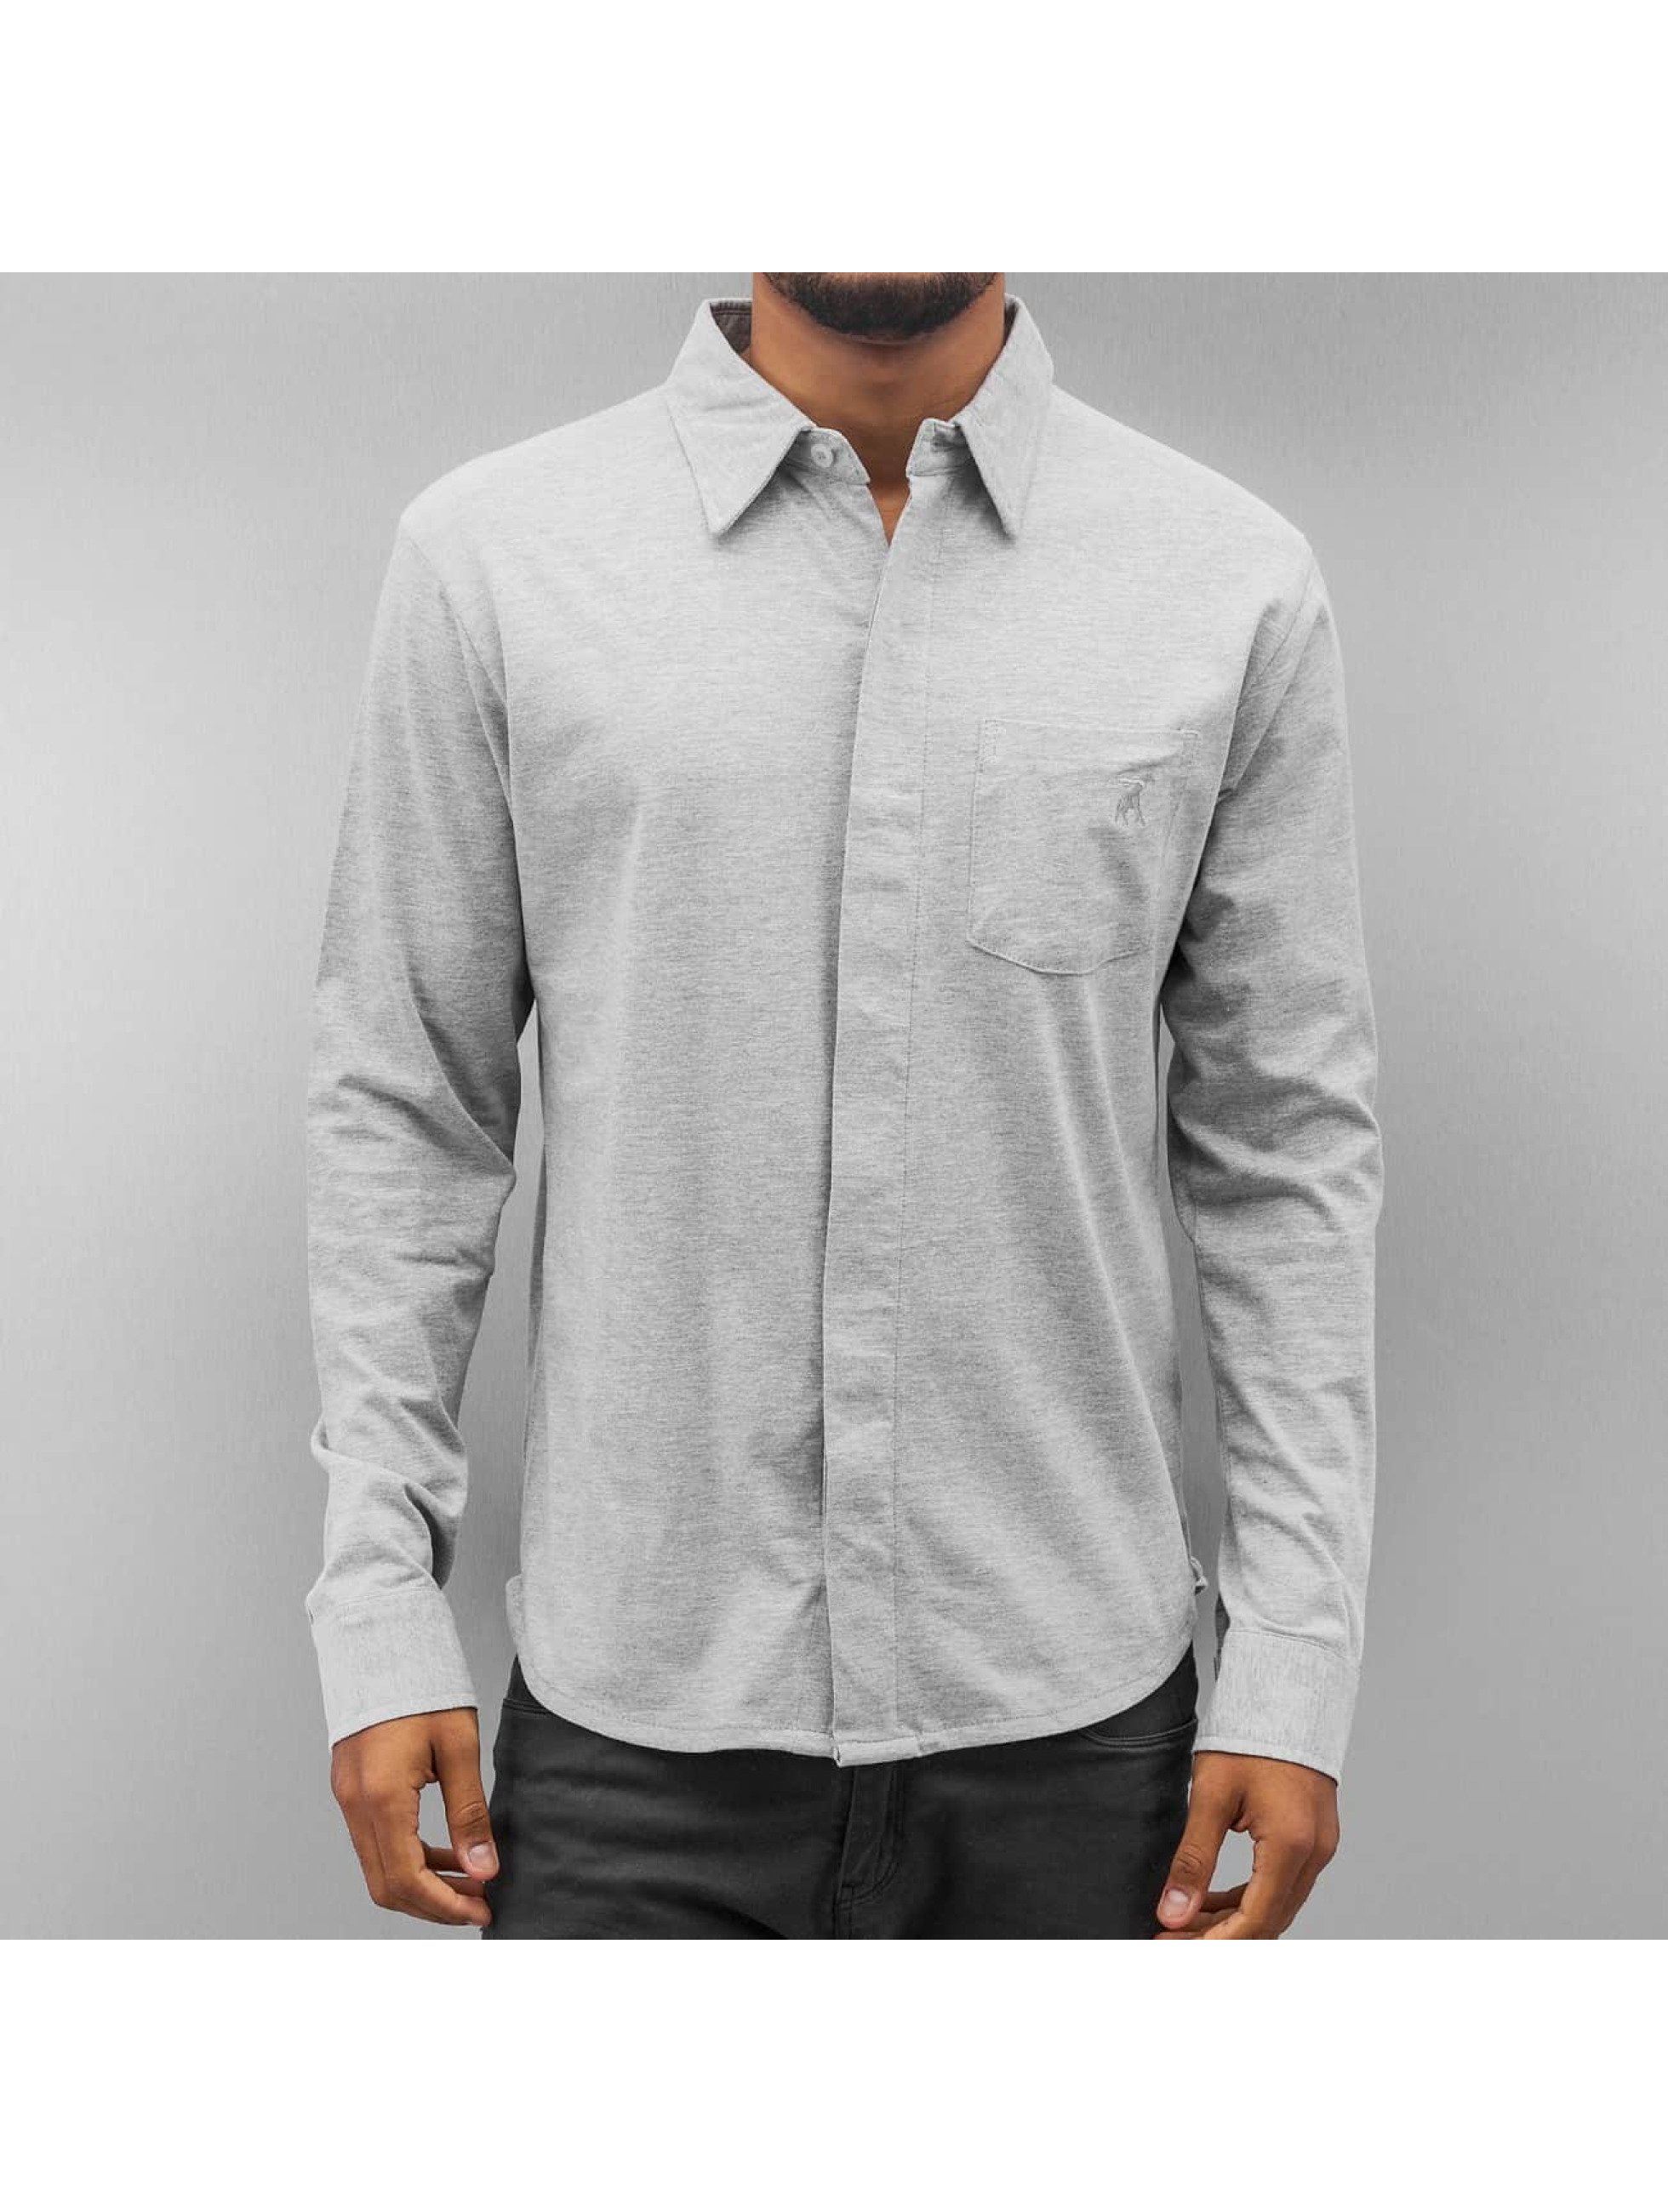 Cazzy Clang bovenstuk / overhemd Basic in grijs